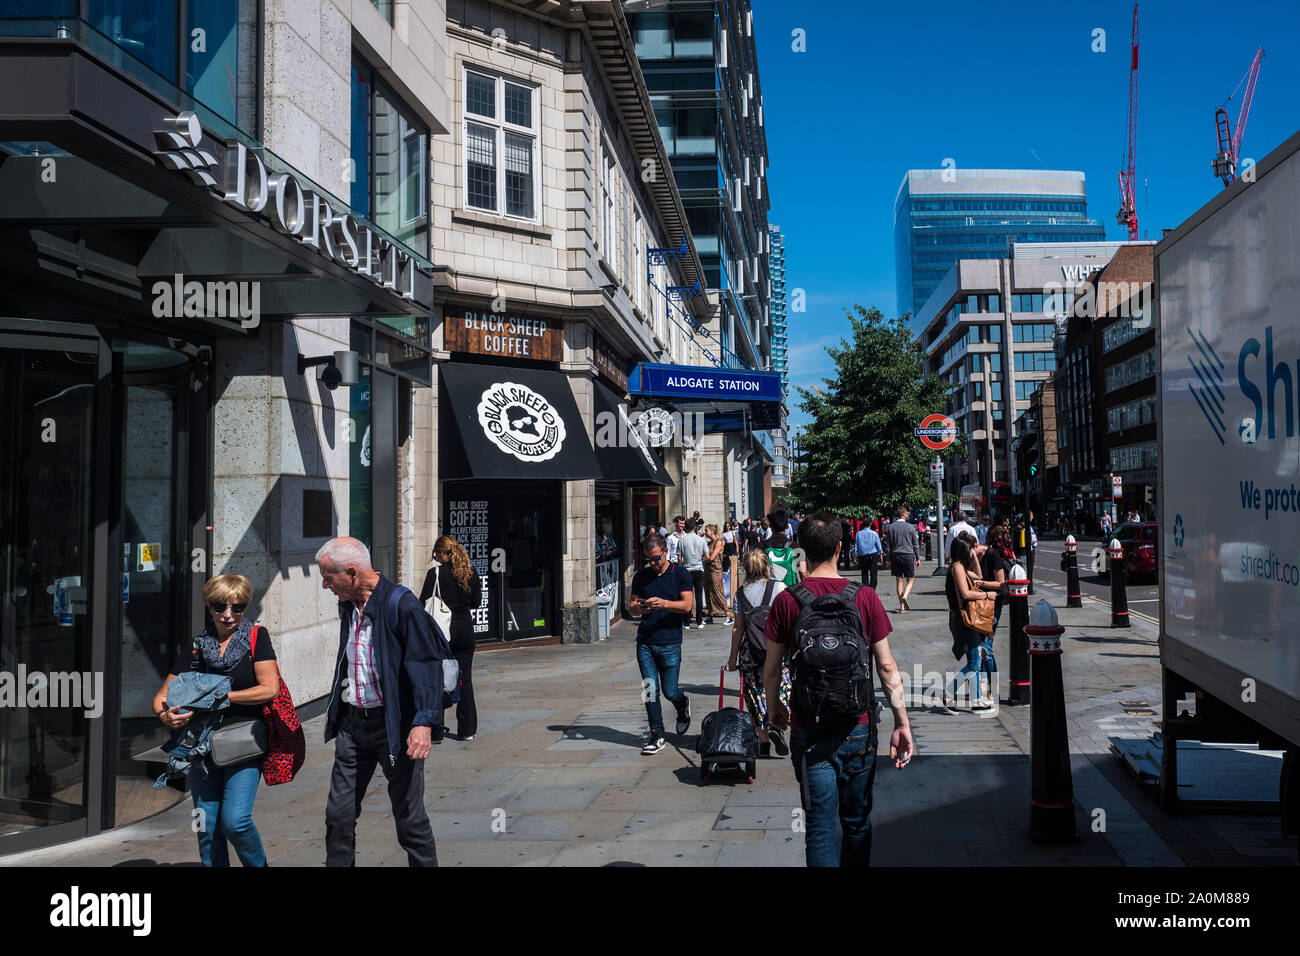 Street scene outside of Aldgate Station, Aldgate High Street, City of London, England, U.K. Stock Photo